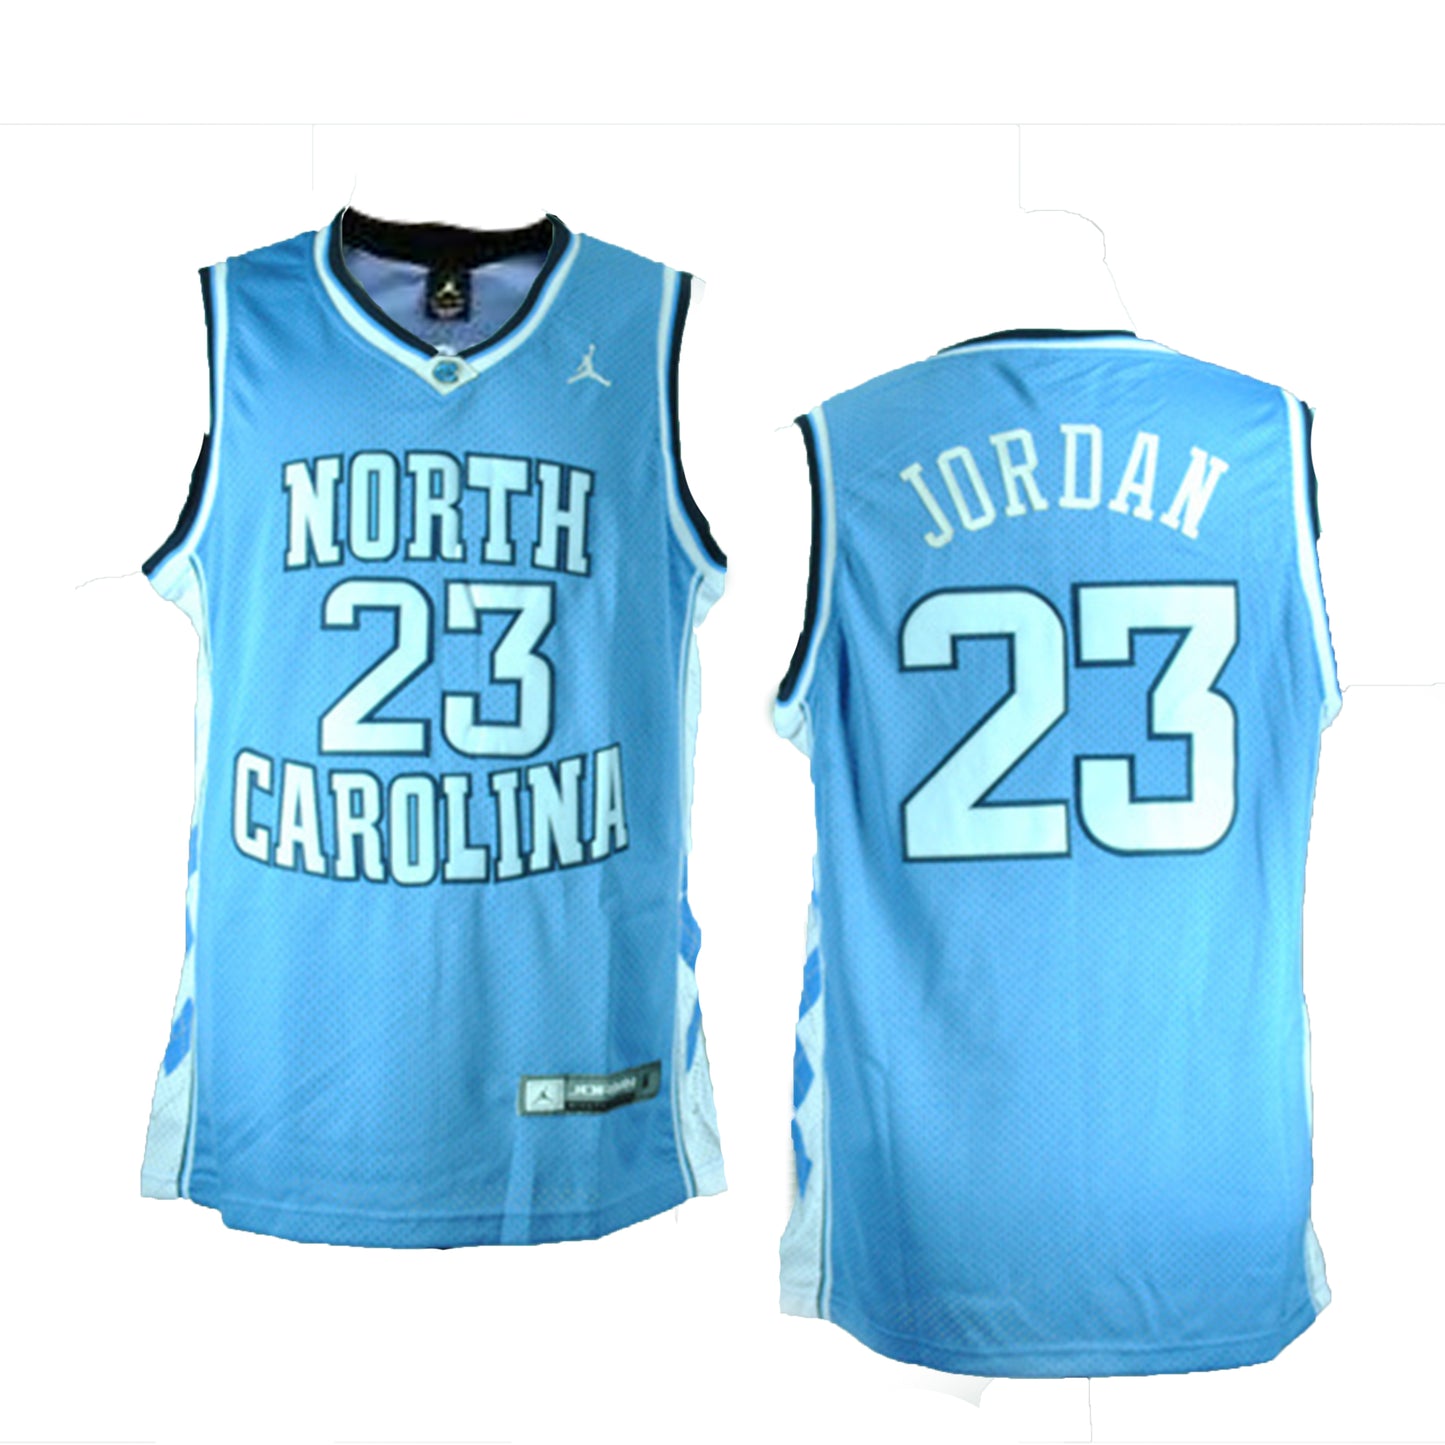 #23 North Carolina Tar Heels Jordan Brand Youth Team Replica Basketball ...